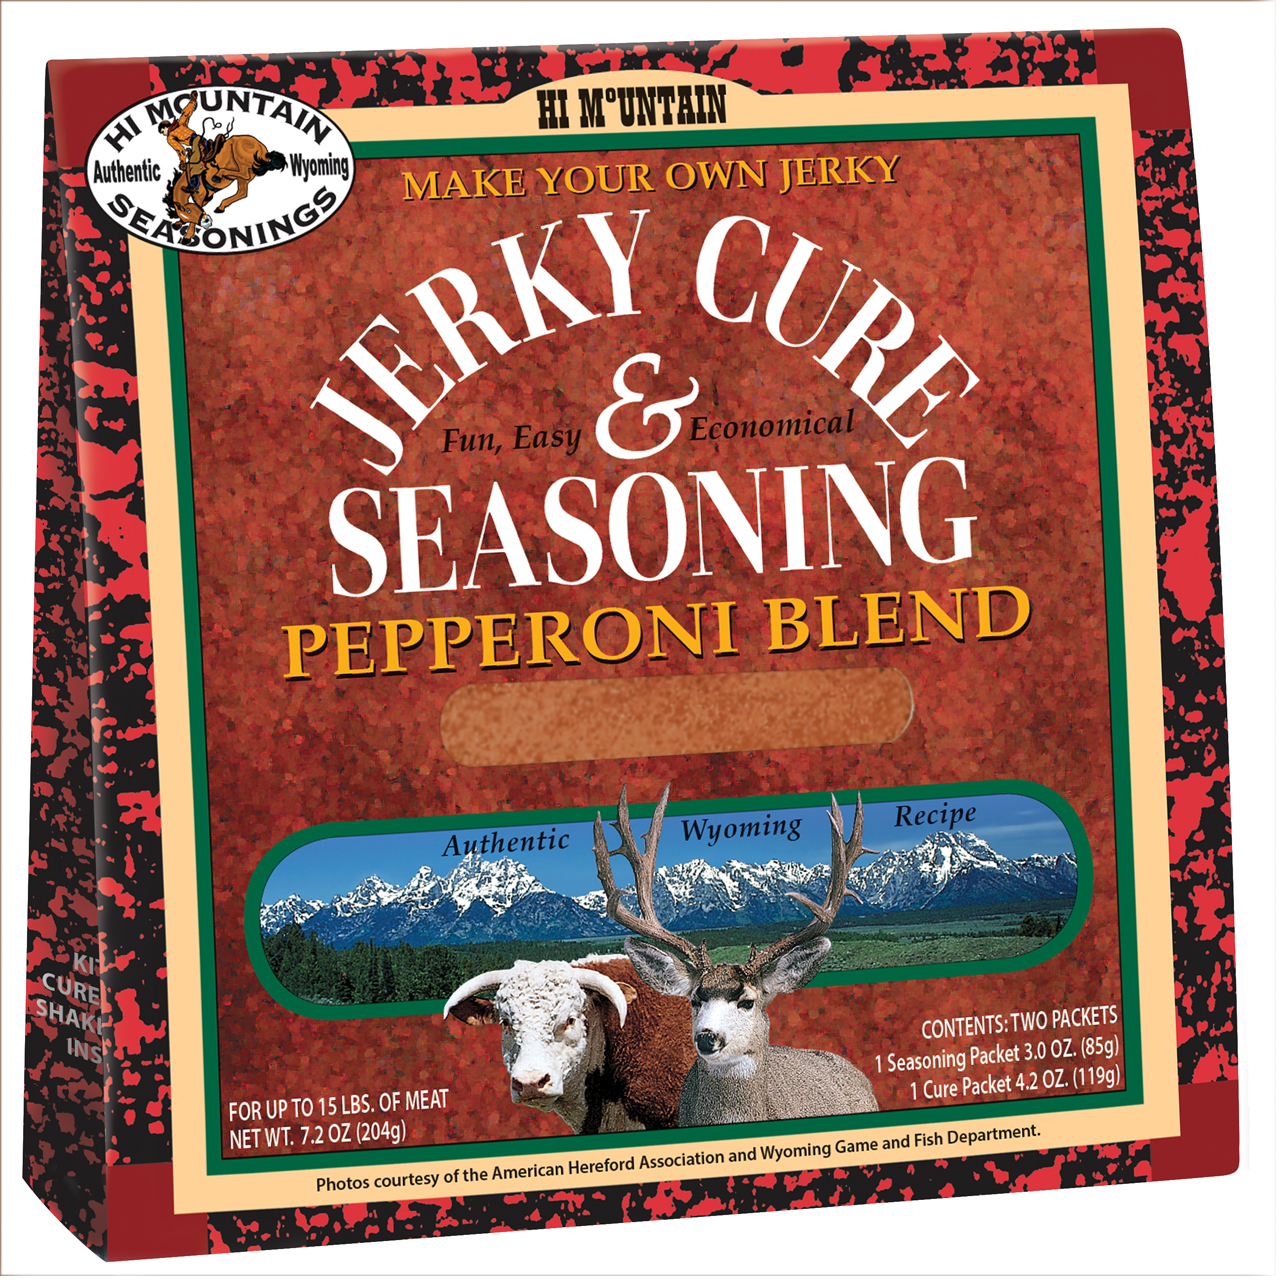 PS Seasoning & Spices Jerky Kit - Mesquite